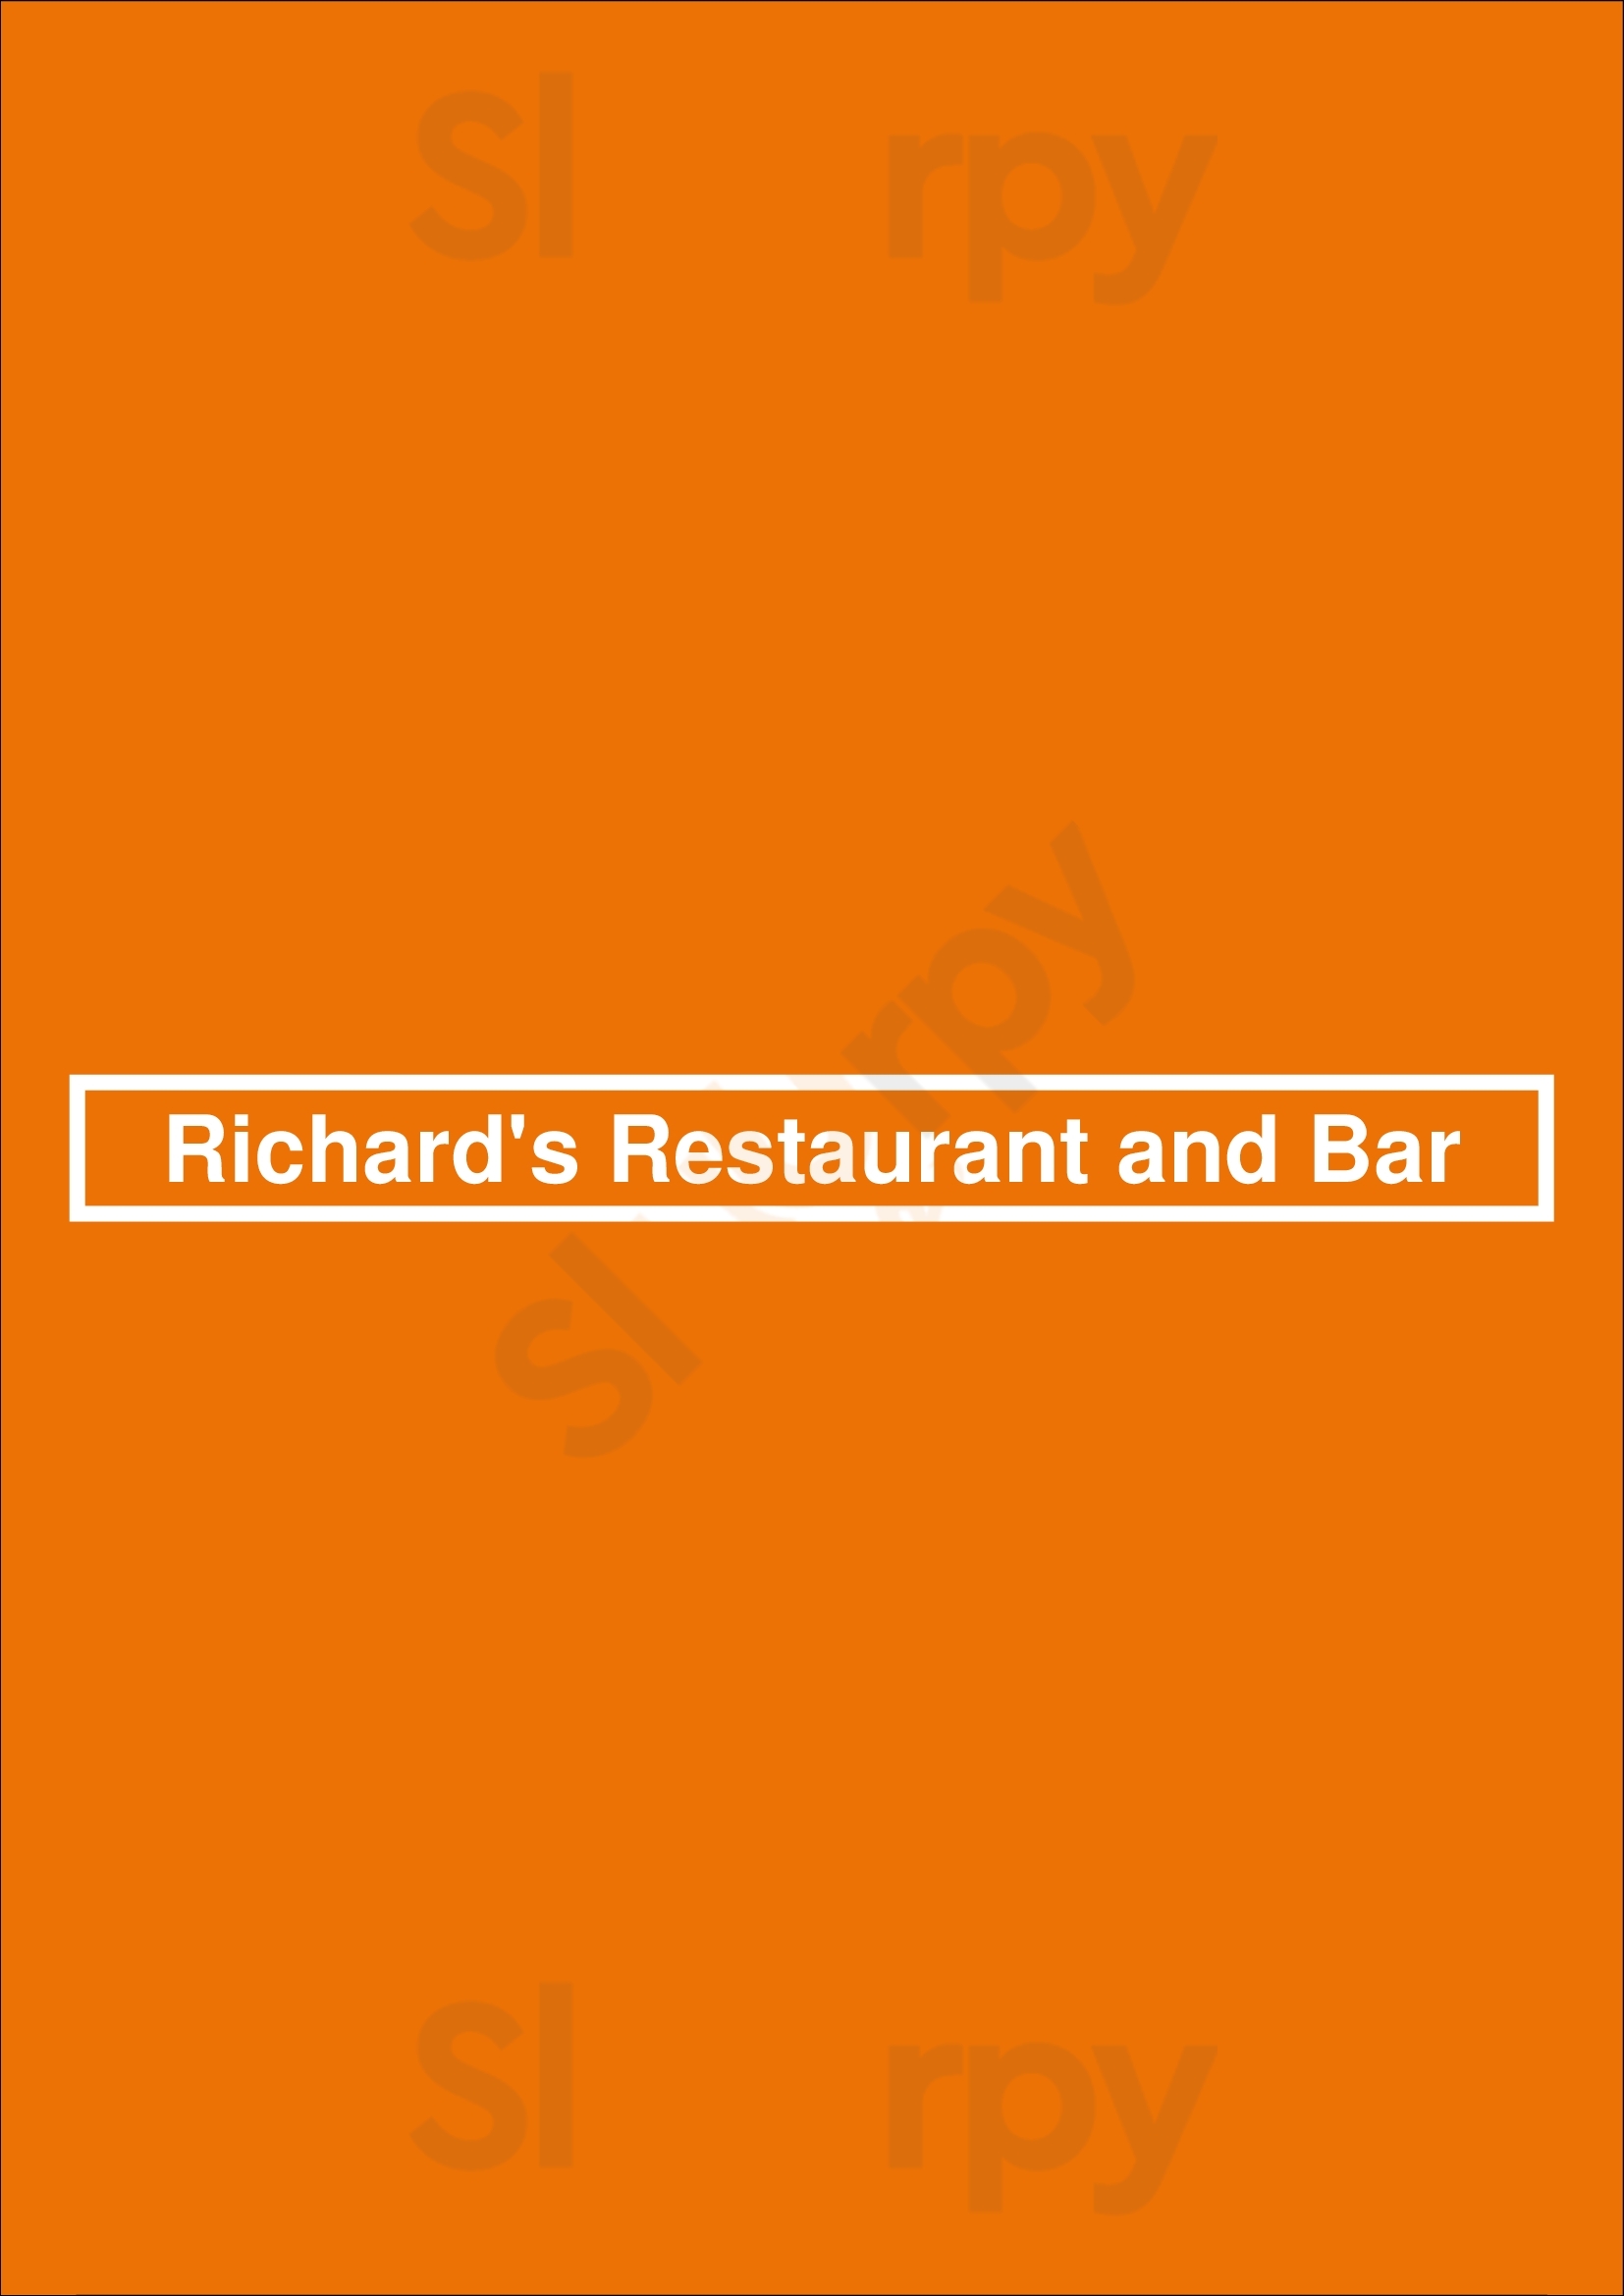 Richard's Restaurant And Bar Brooklyn Menu - 1